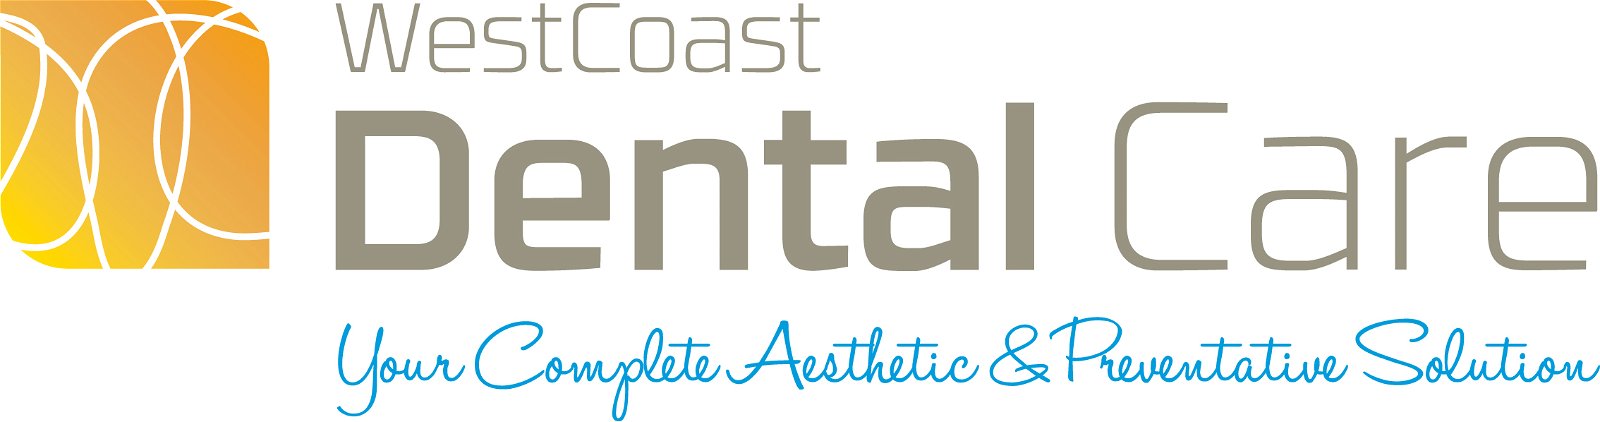 West Coast Dental Care - Cairns Dentist 0